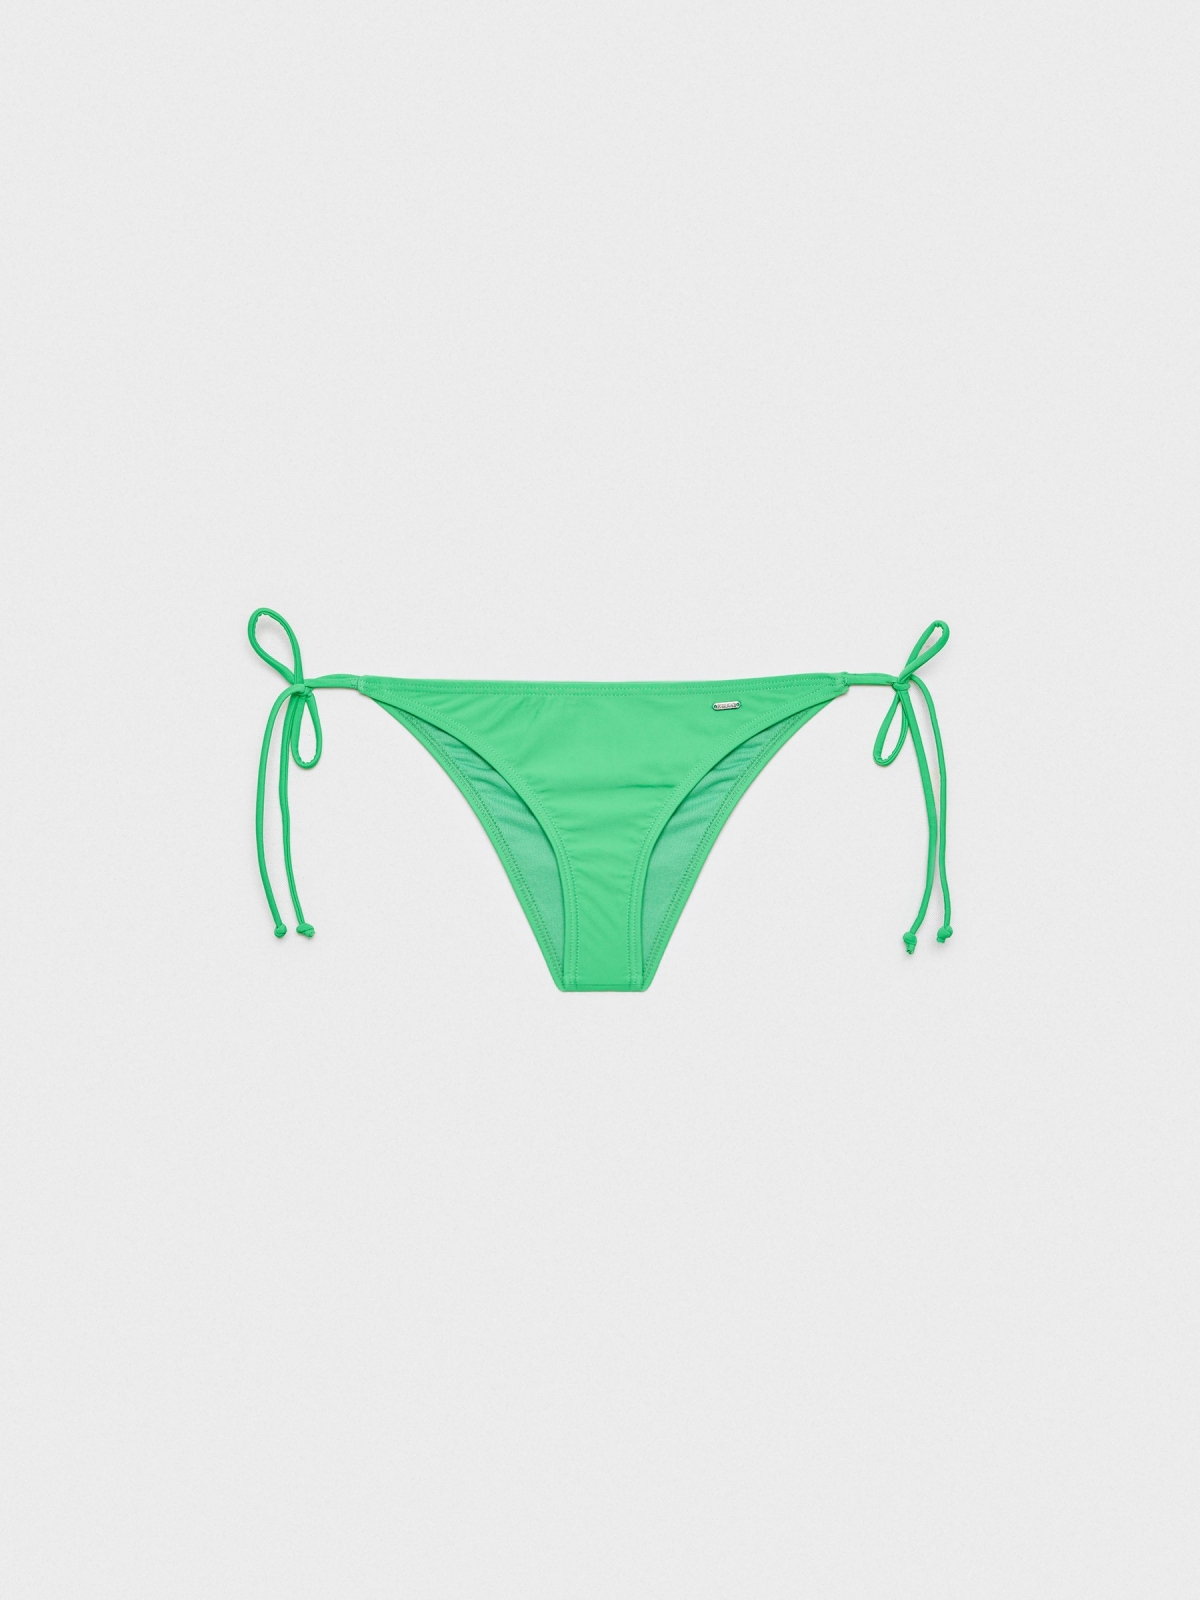  Knotted bikini bottoms green